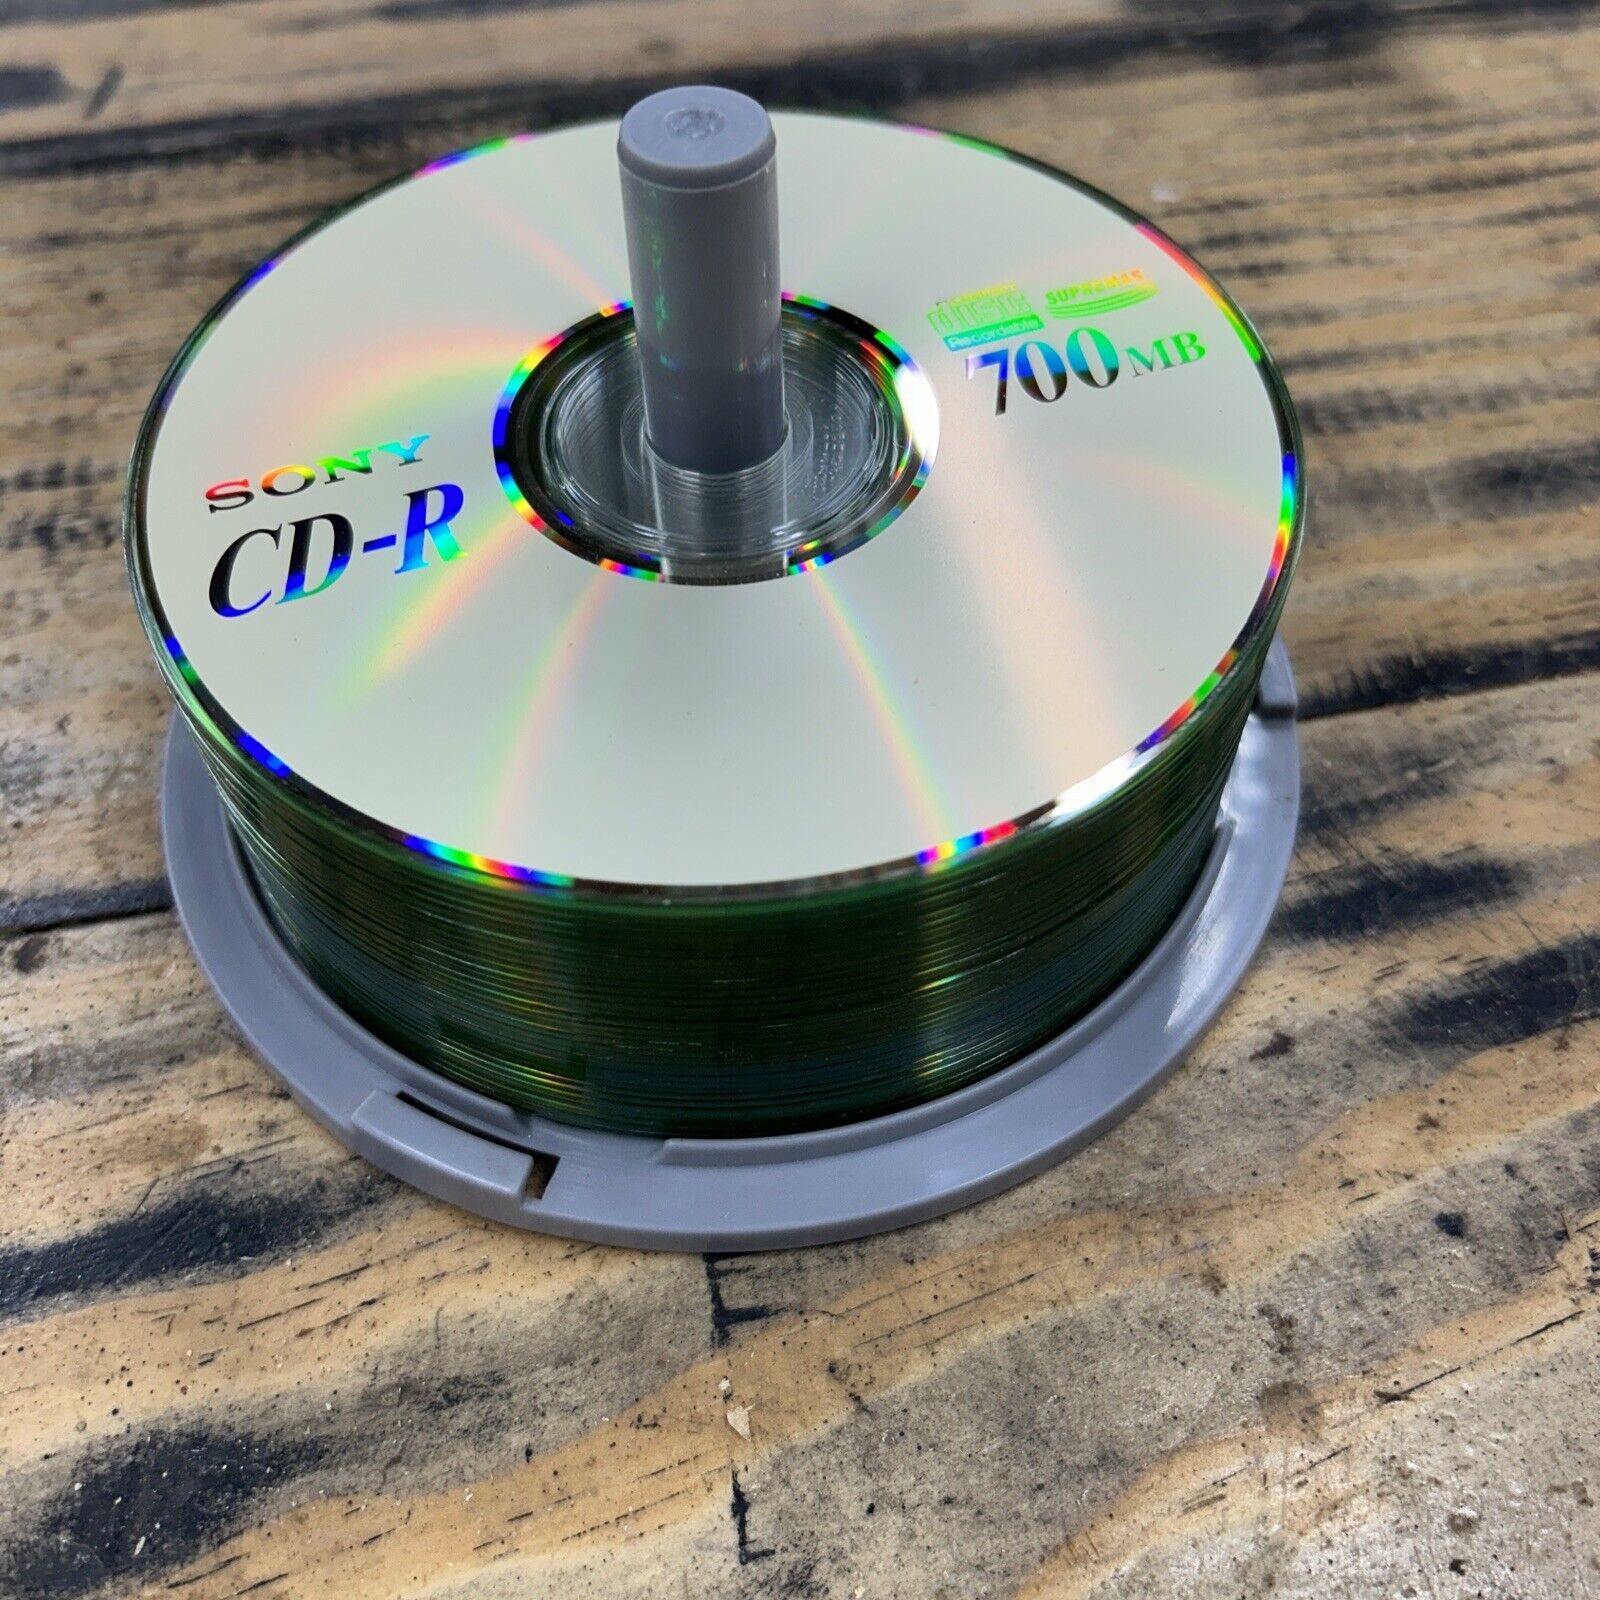 Sony CD-R 700mb 32 Total